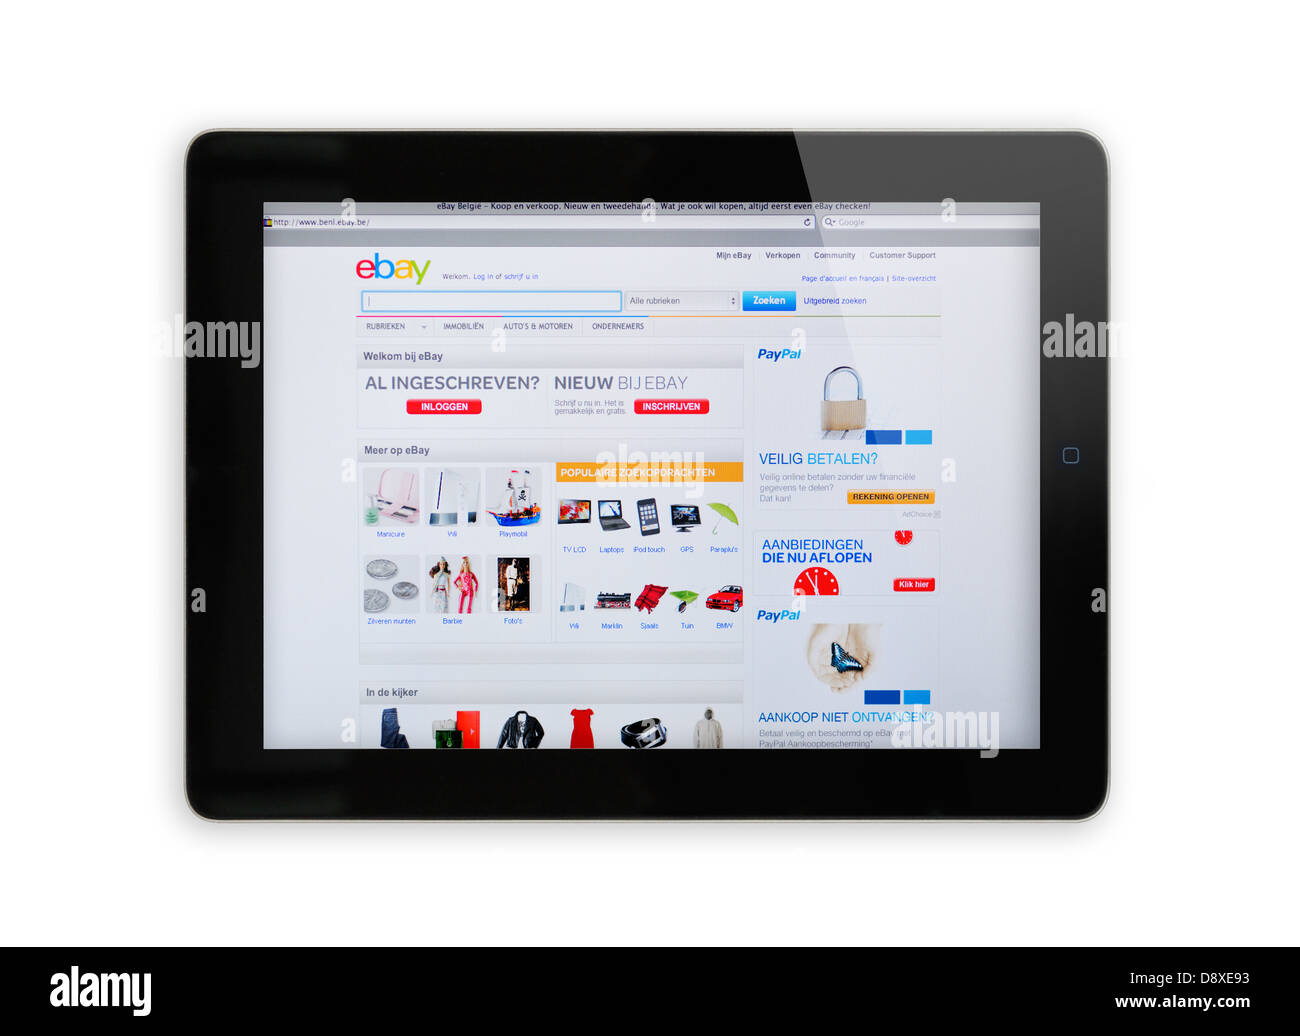 Belgien eBay online-shopping-Website auf dem iPad-Bildschirm Stockfoto